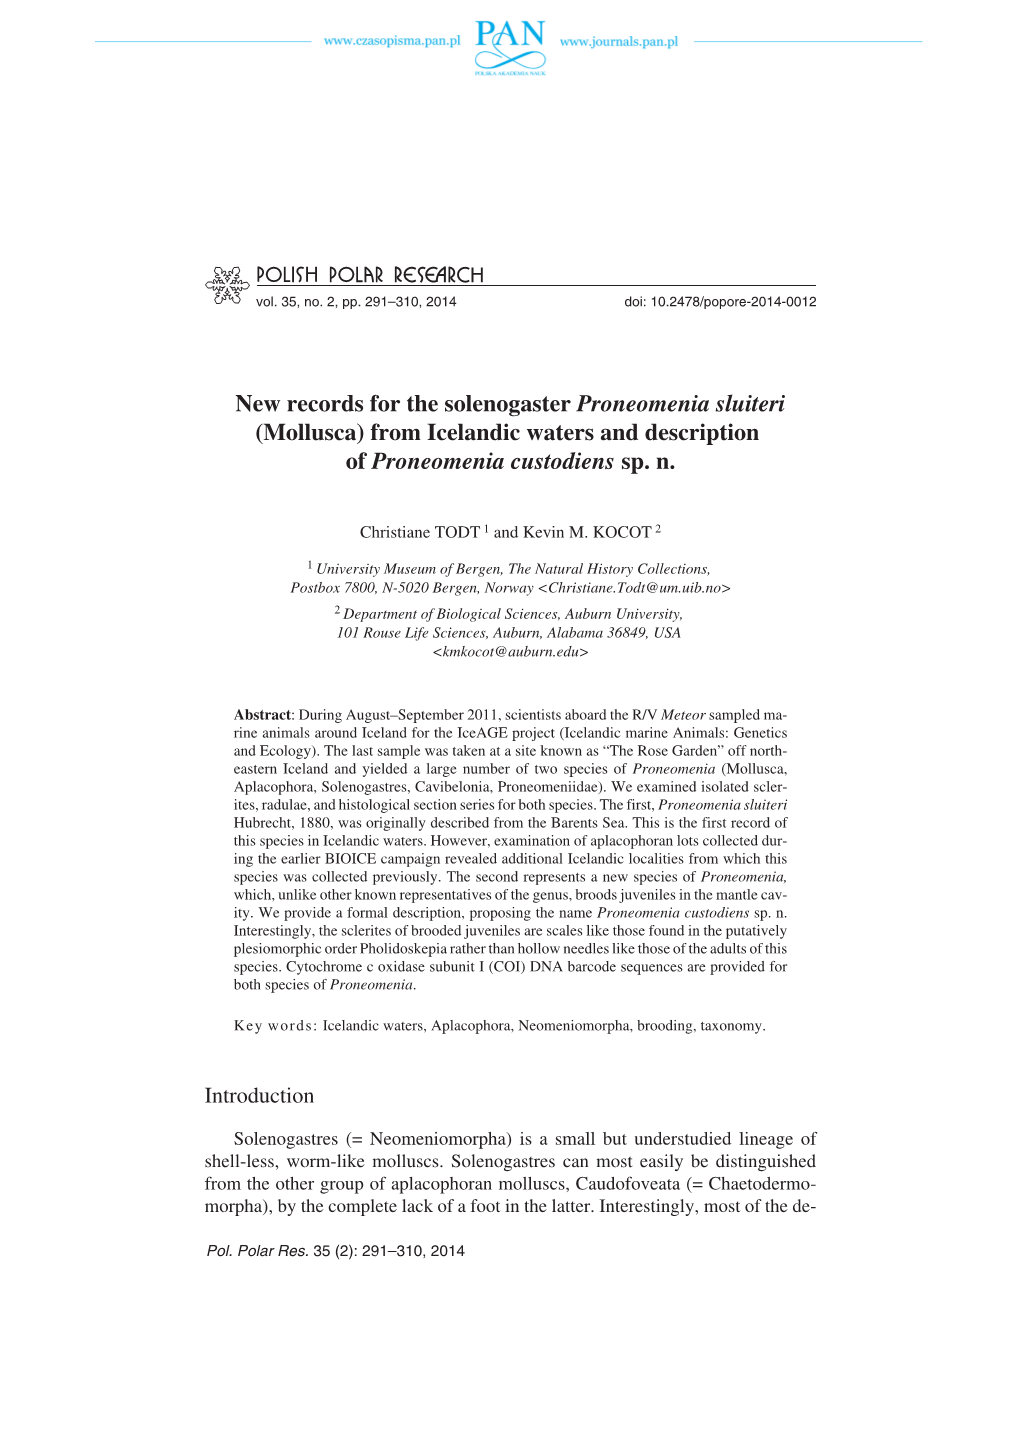 New Records for the Solenogaster Proneomenia Sluiteri (Mollusca) from Icelandic Waters and Description of Proneomenia Custodiens Sp